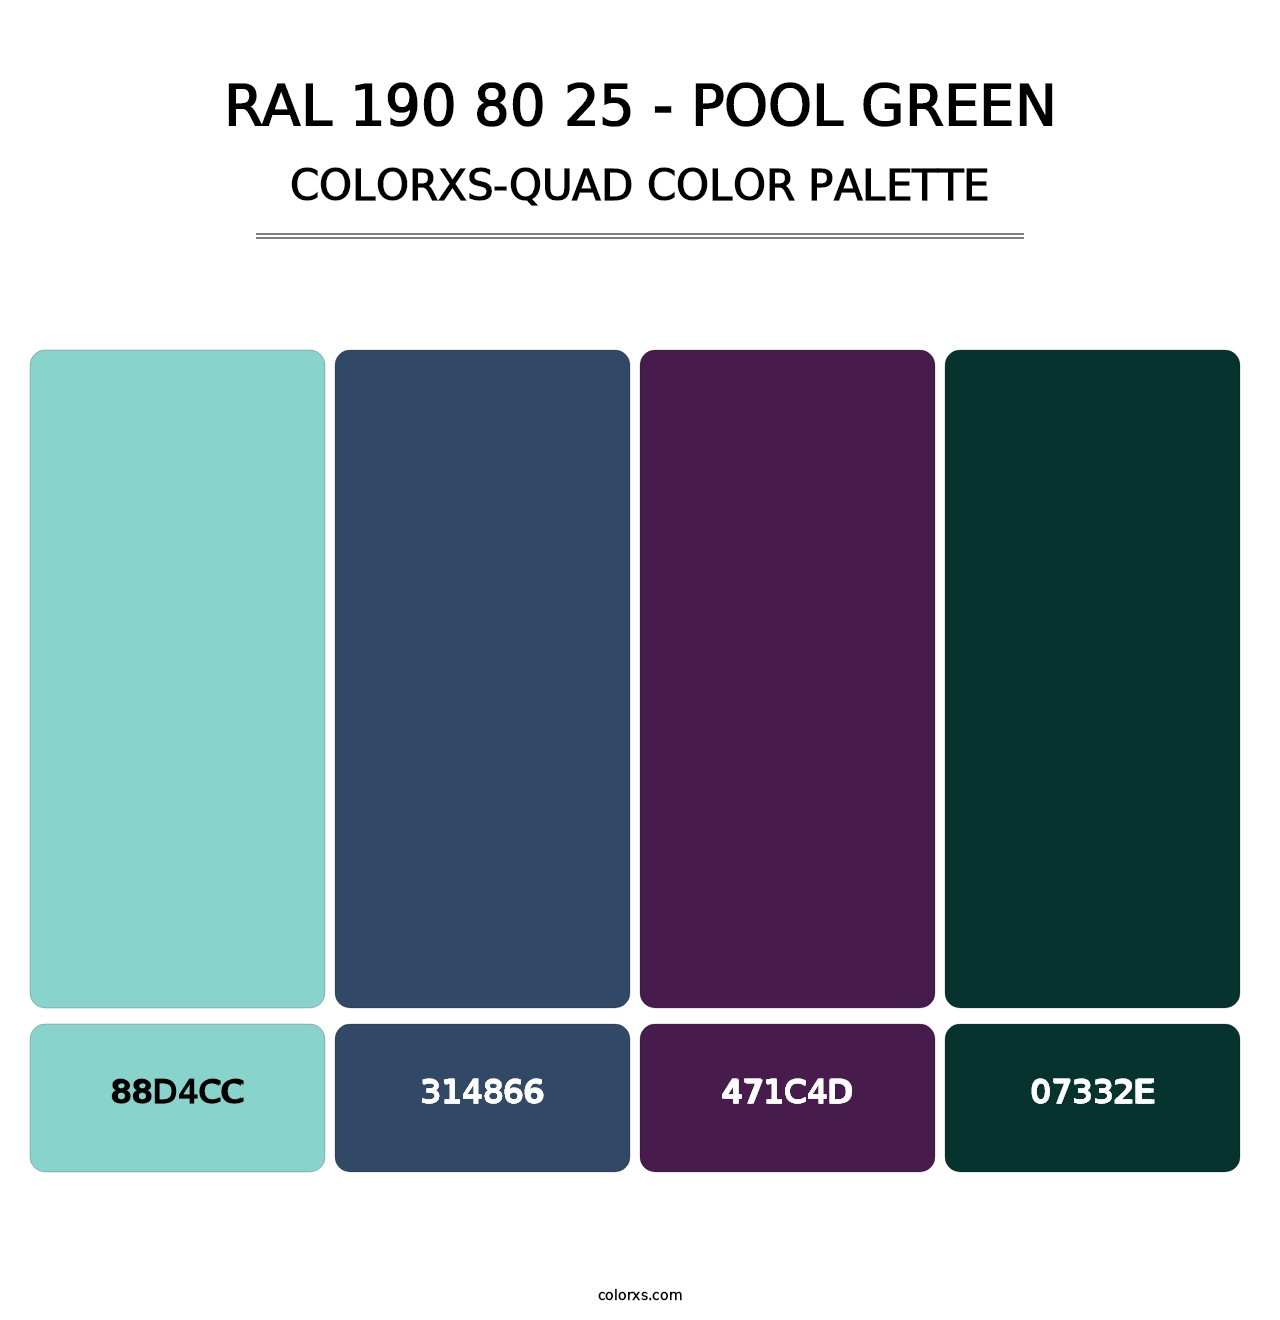 RAL 190 80 25 - Pool Green - Colorxs Quad Palette